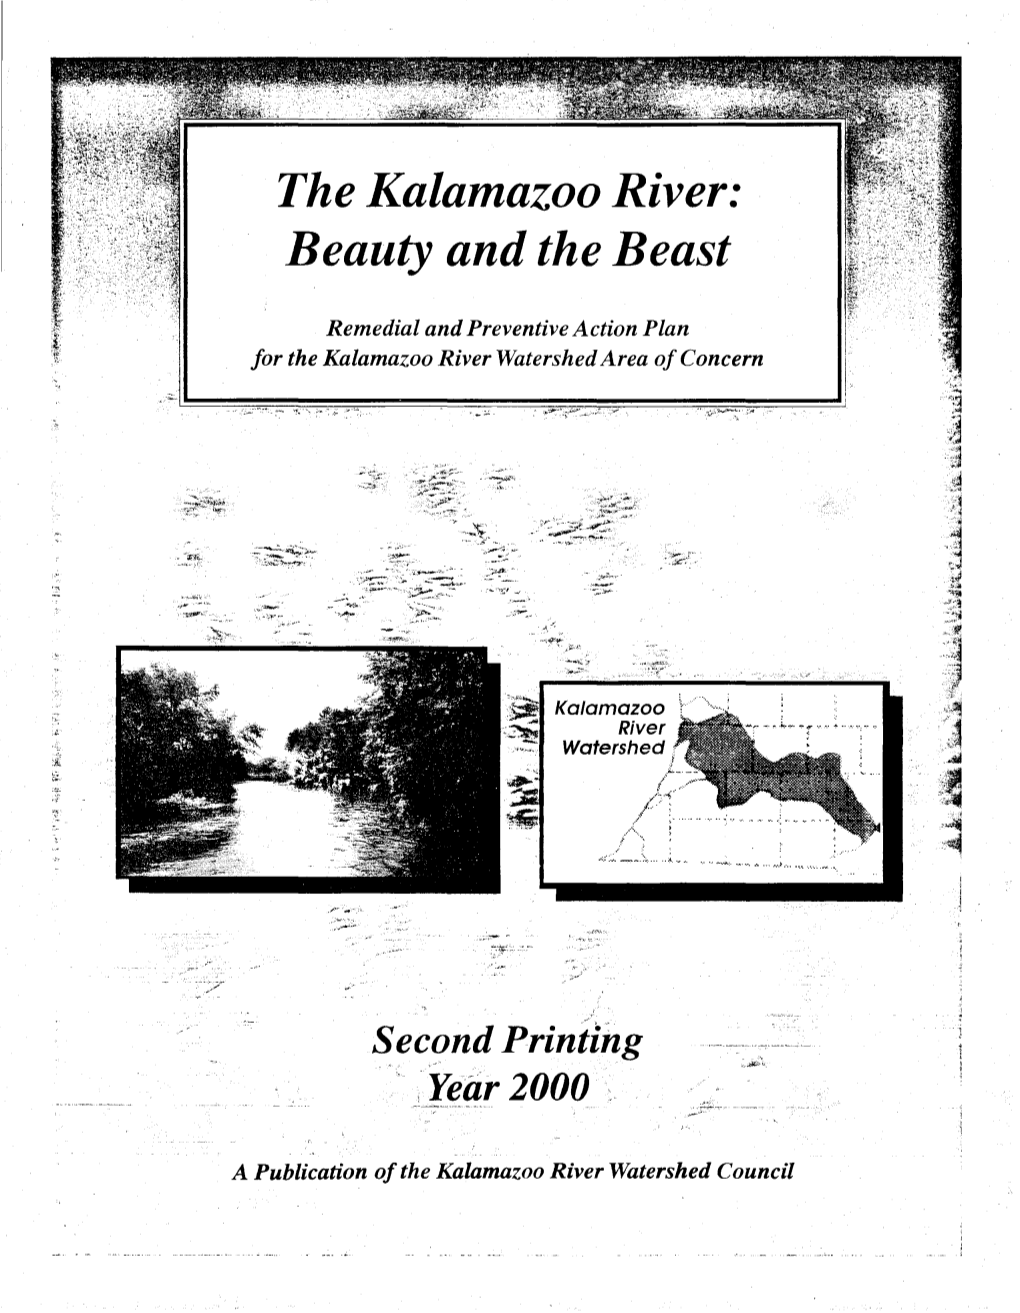 The Kalamazoo River: Beauty and the Beast